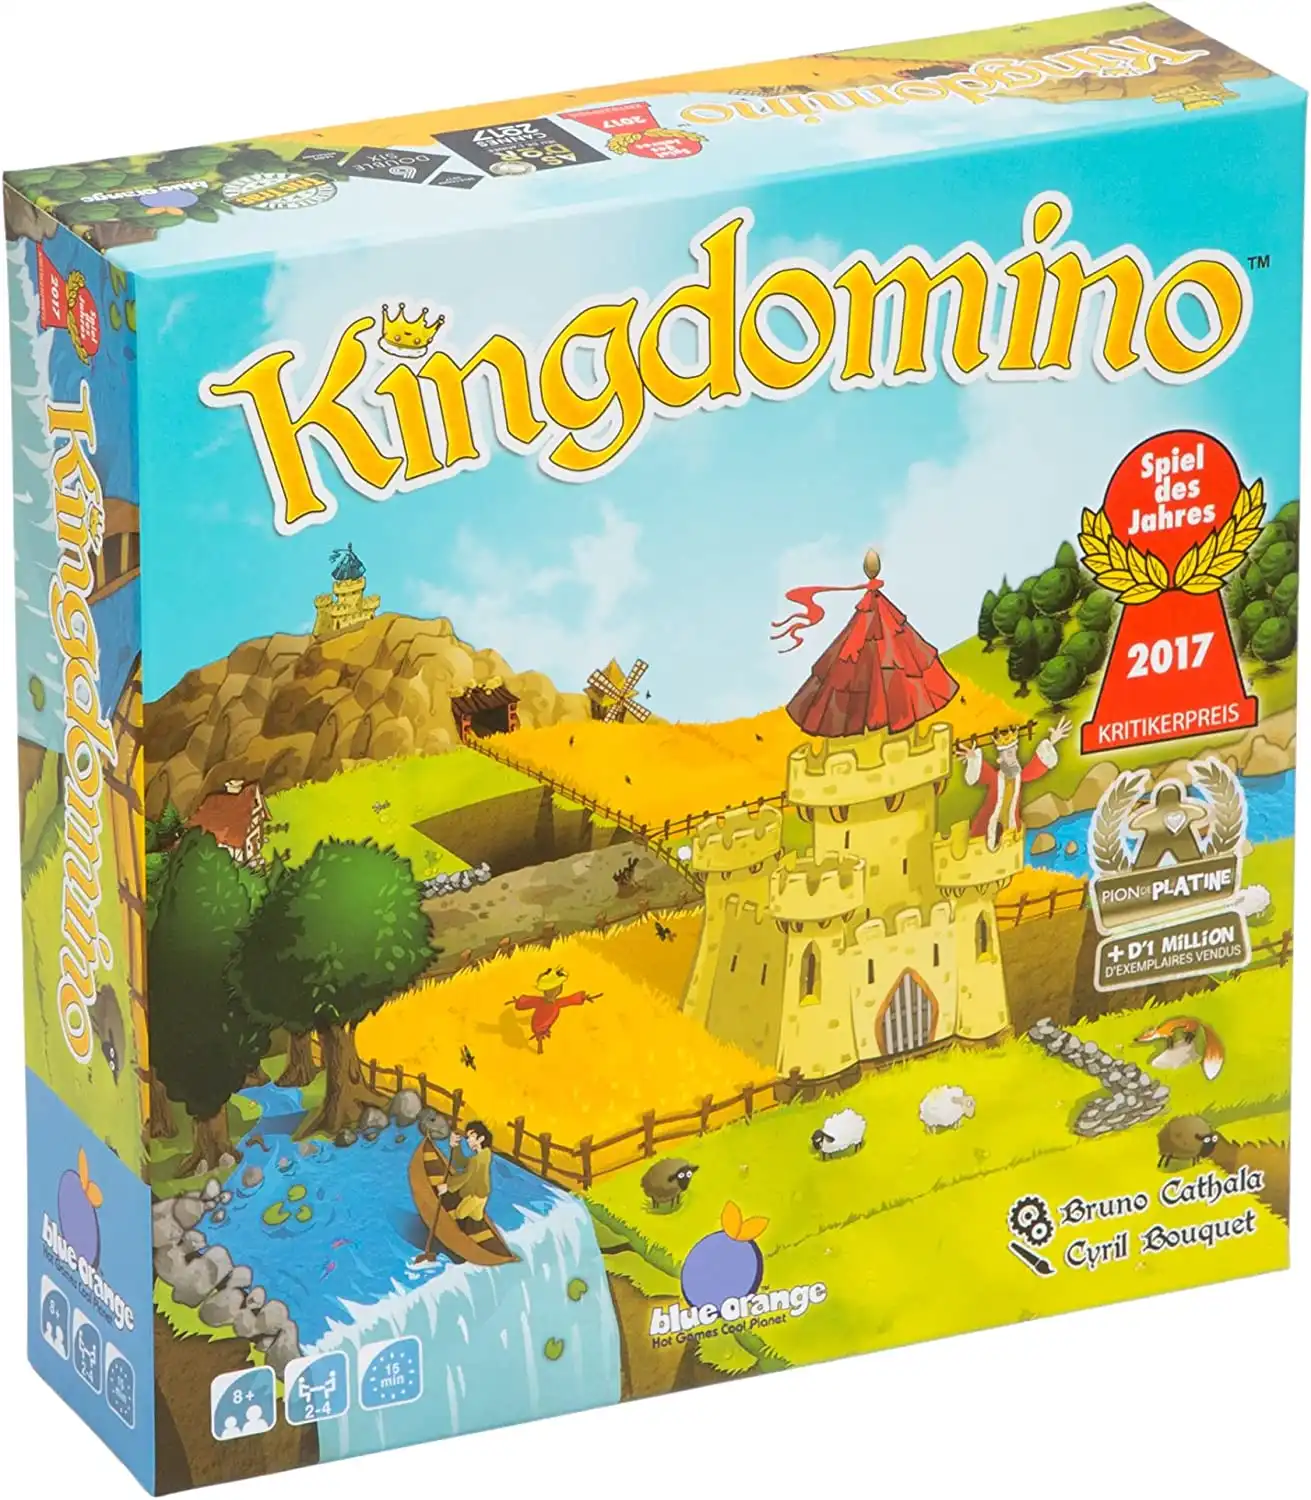 Kingdomino (2016) board game box